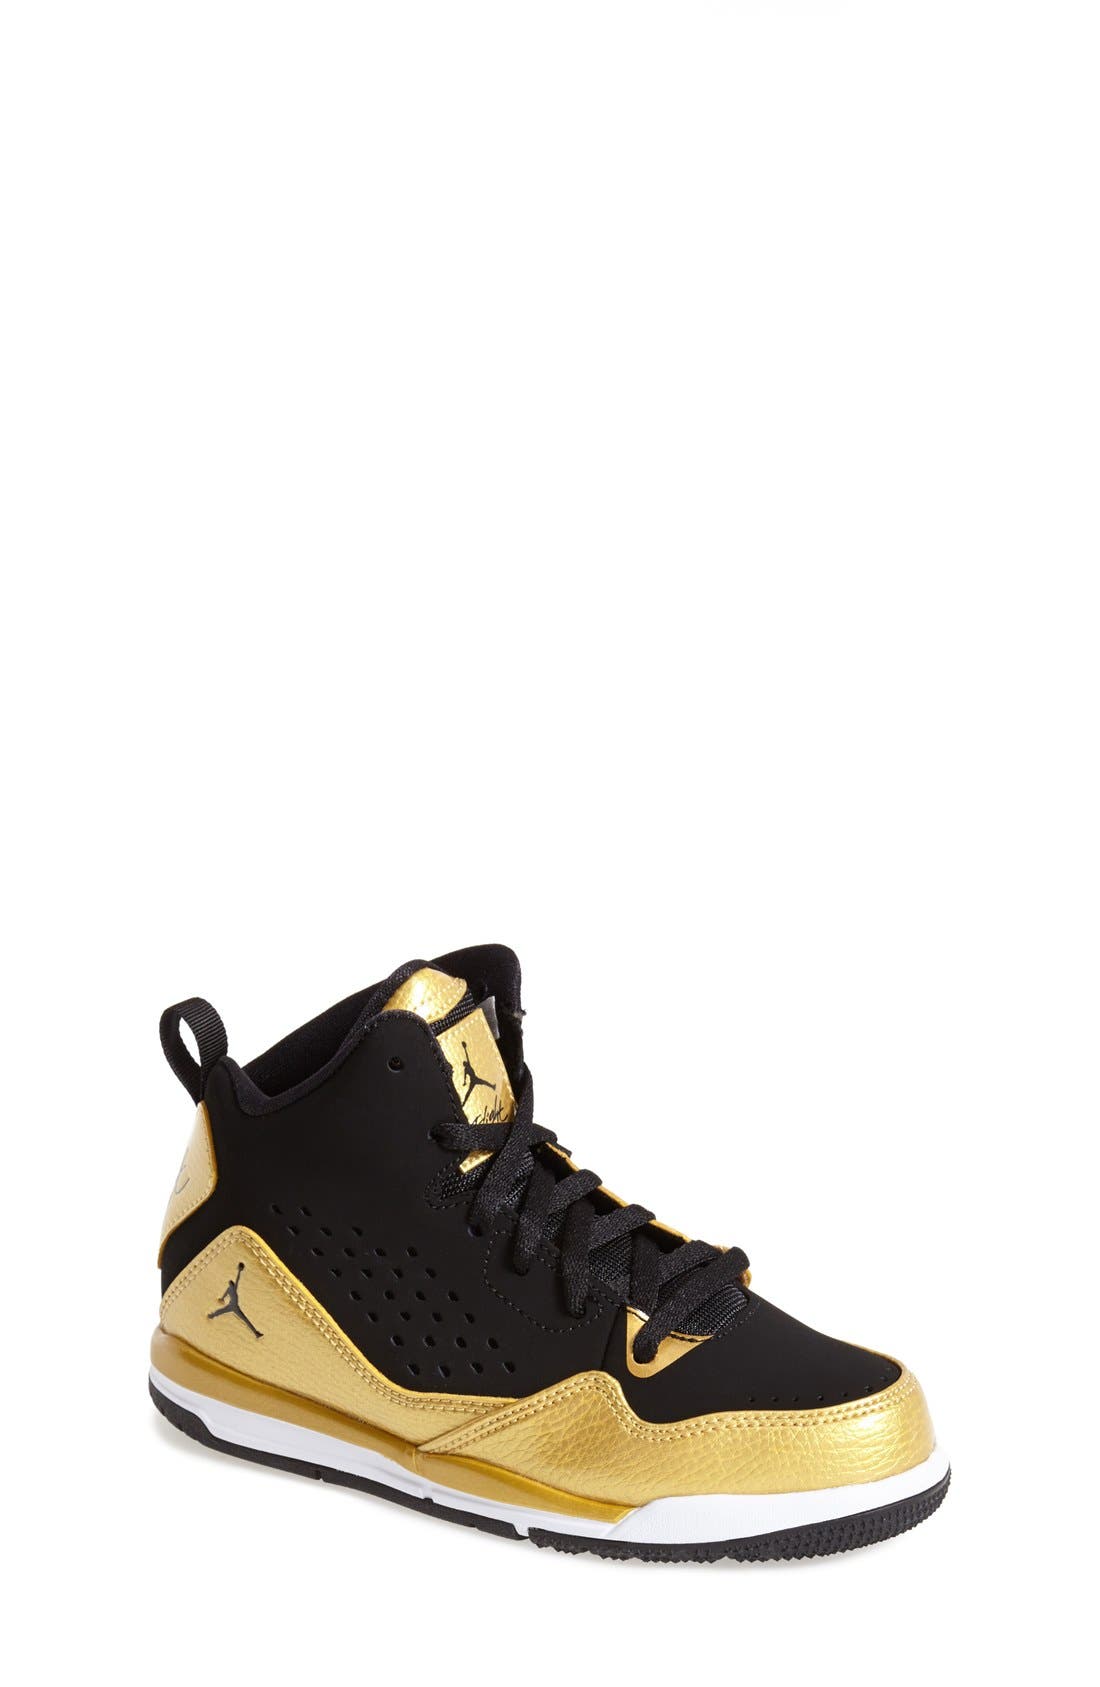 Nike 'Jordan SC3' Basketball Shoe 